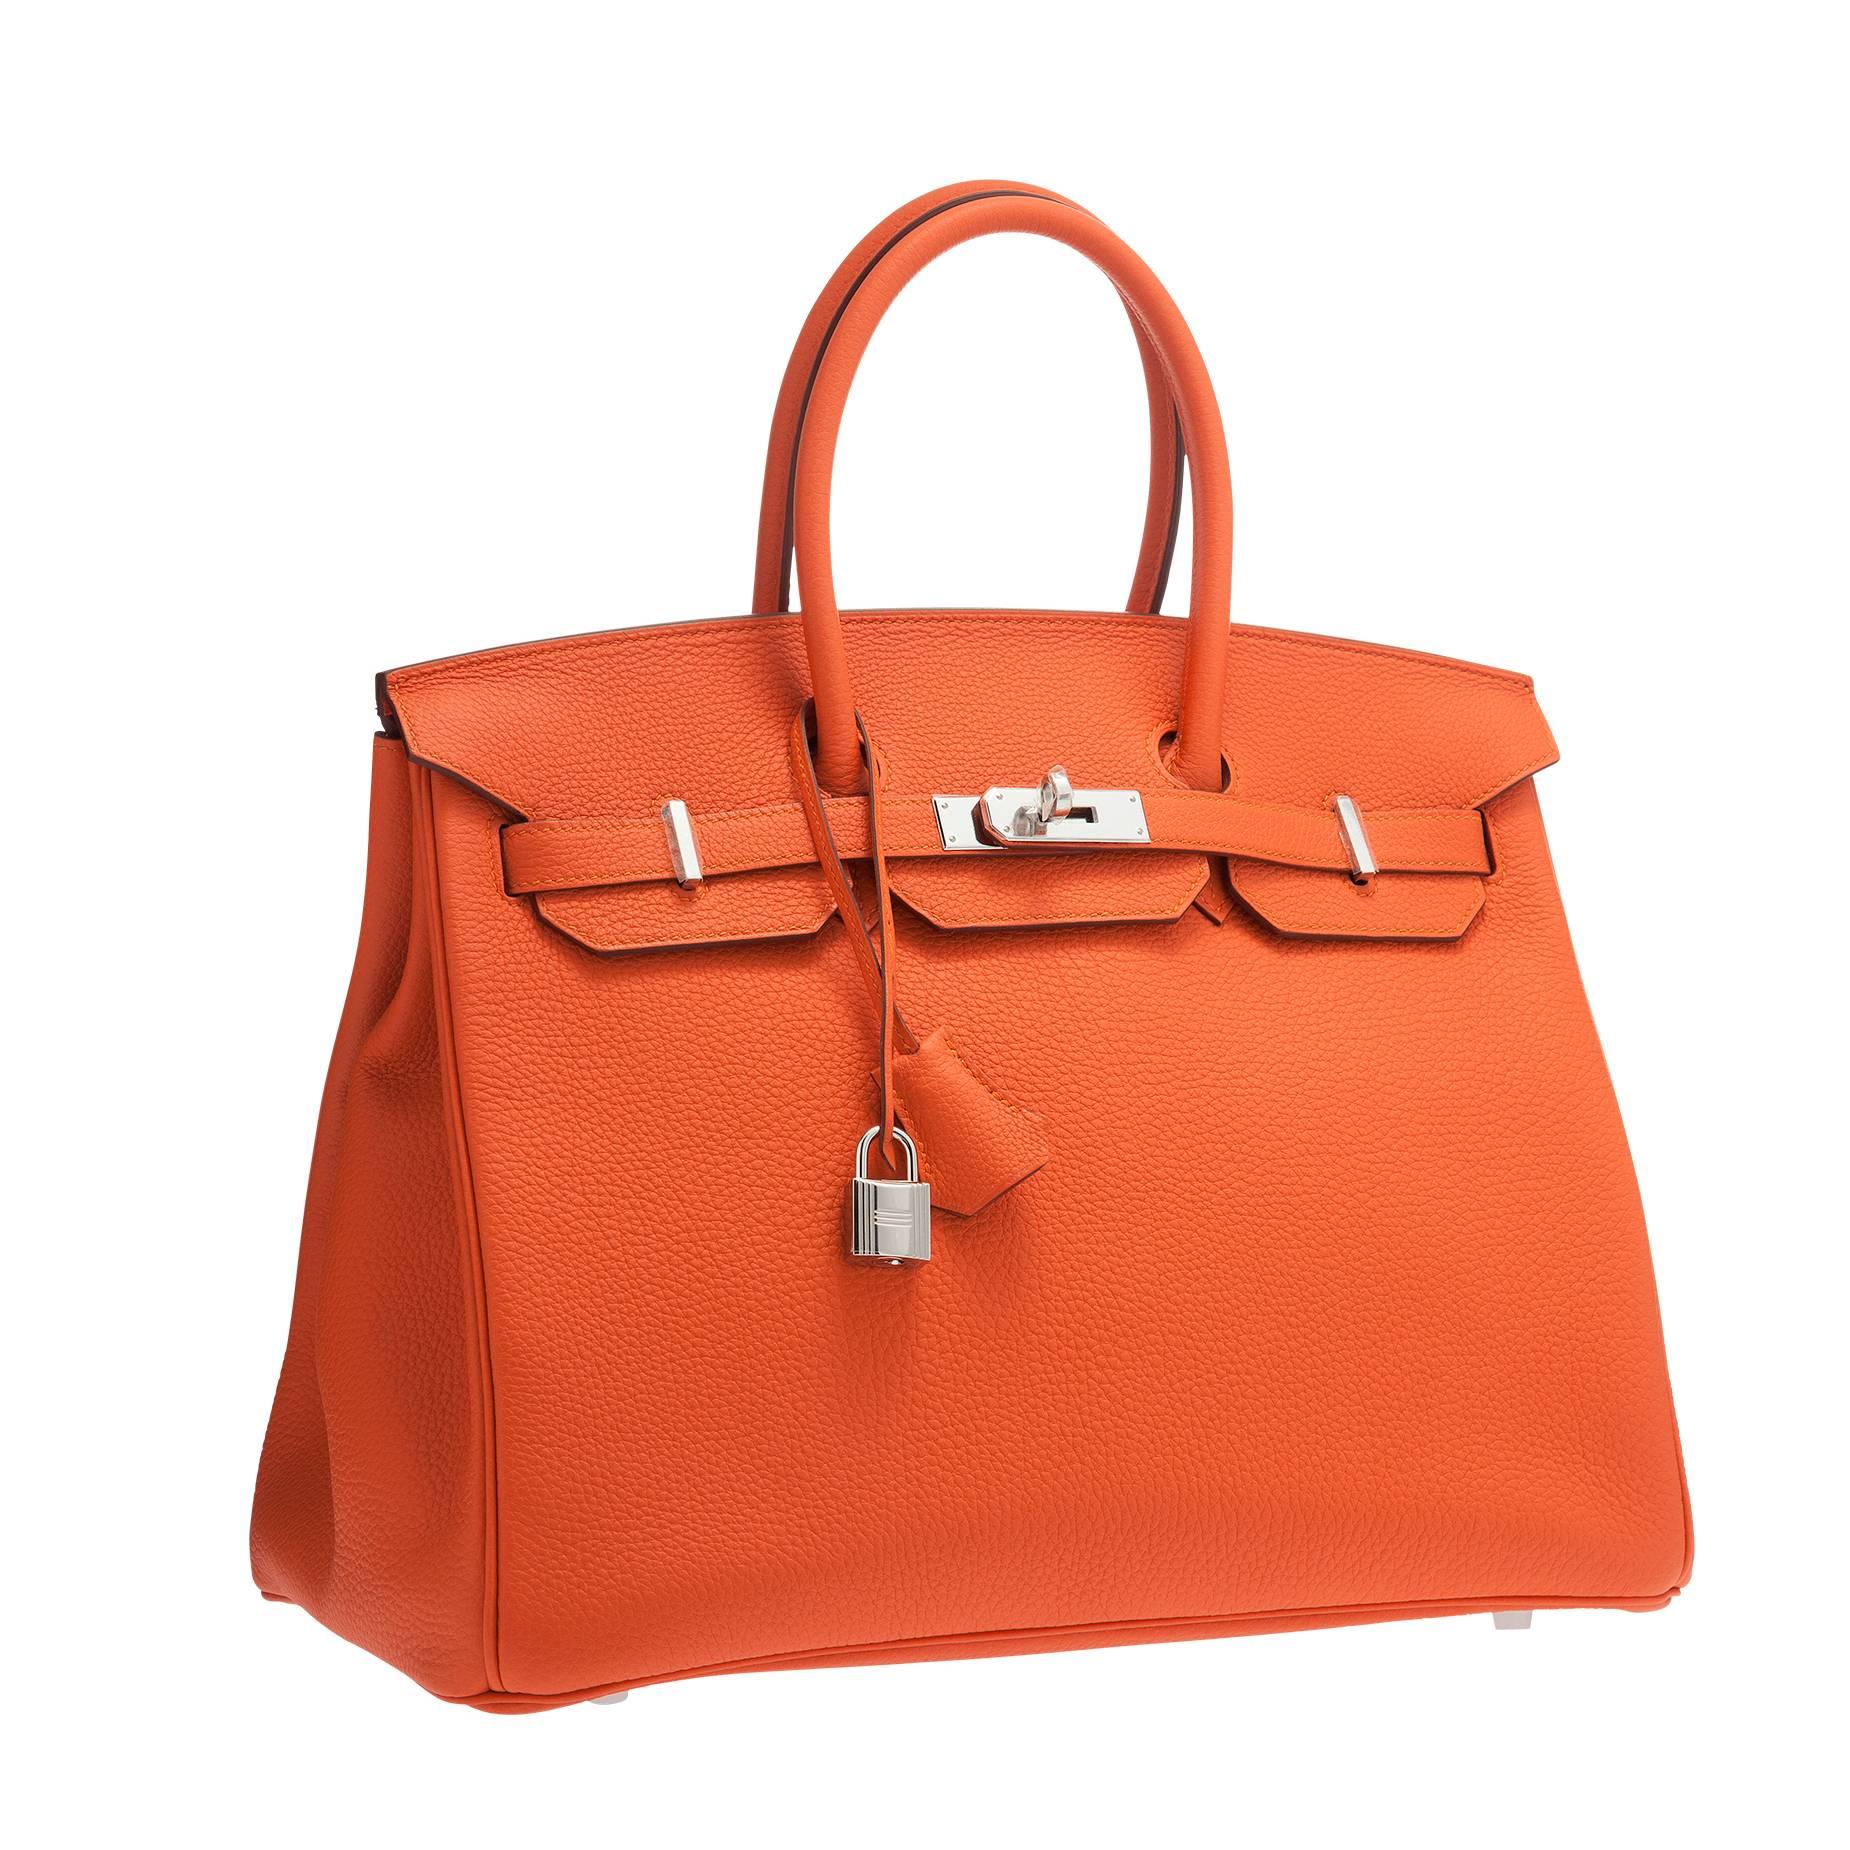 Hermes 35cm Orange Poppy Togo Leather Birkin Bag with Palladium Hardware For Sale